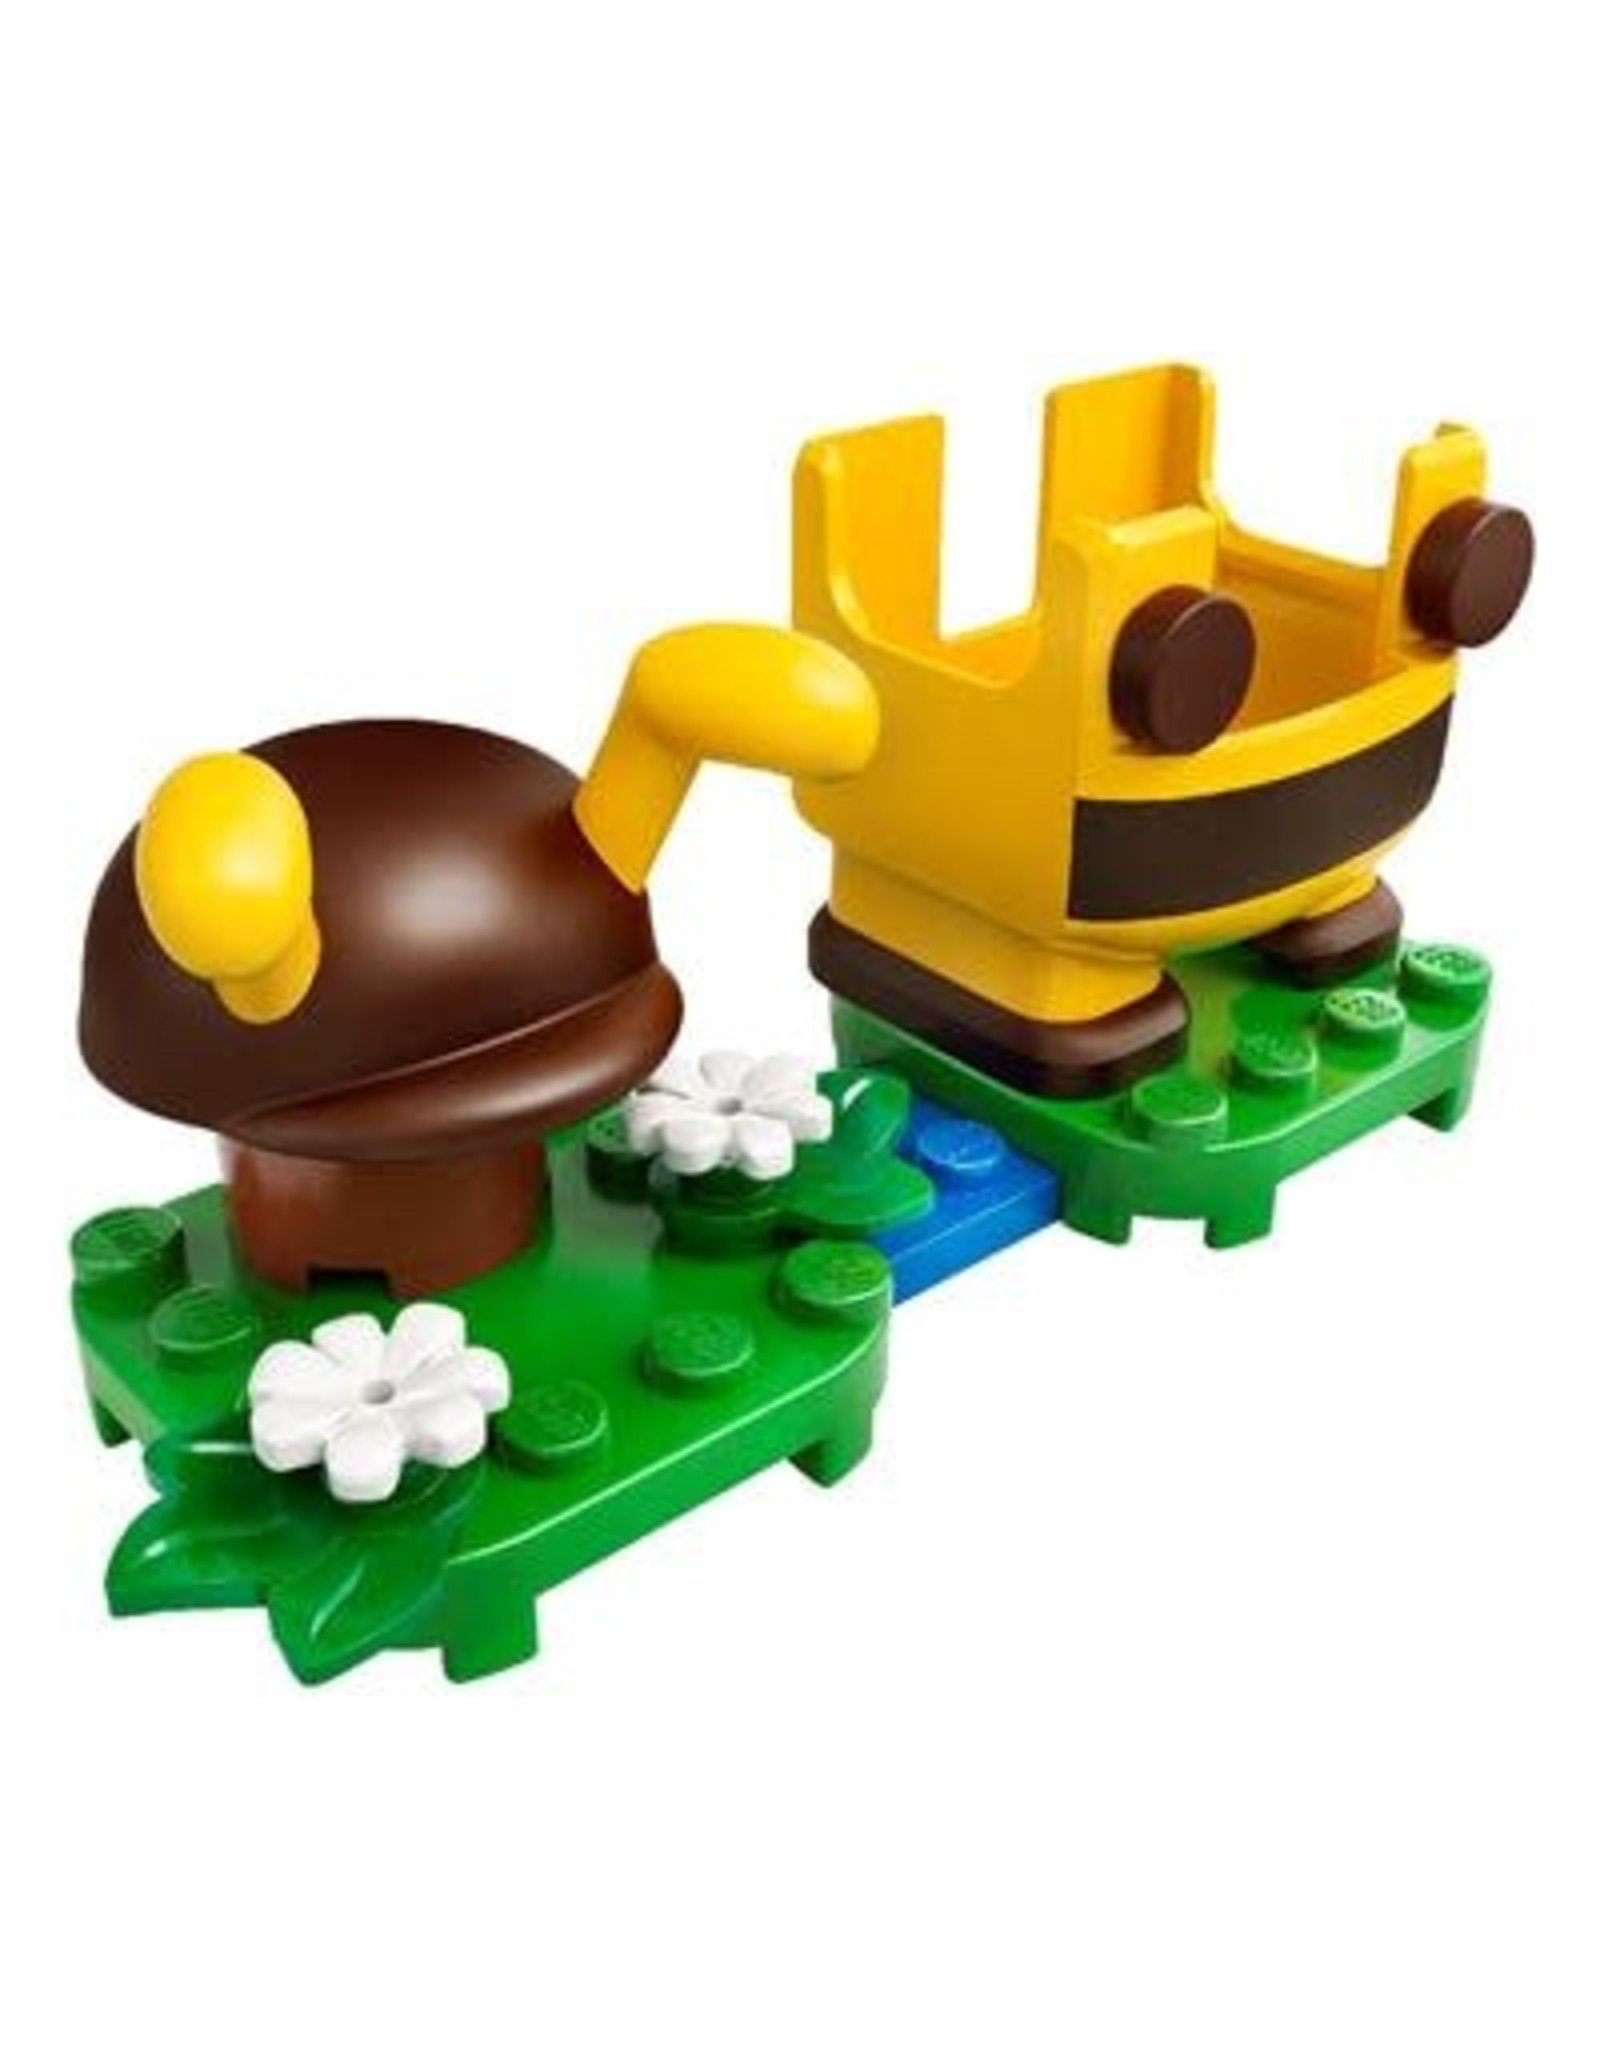 LEGO Lego Super Mario 71393 Power-Uppakket: Bijen-Mario